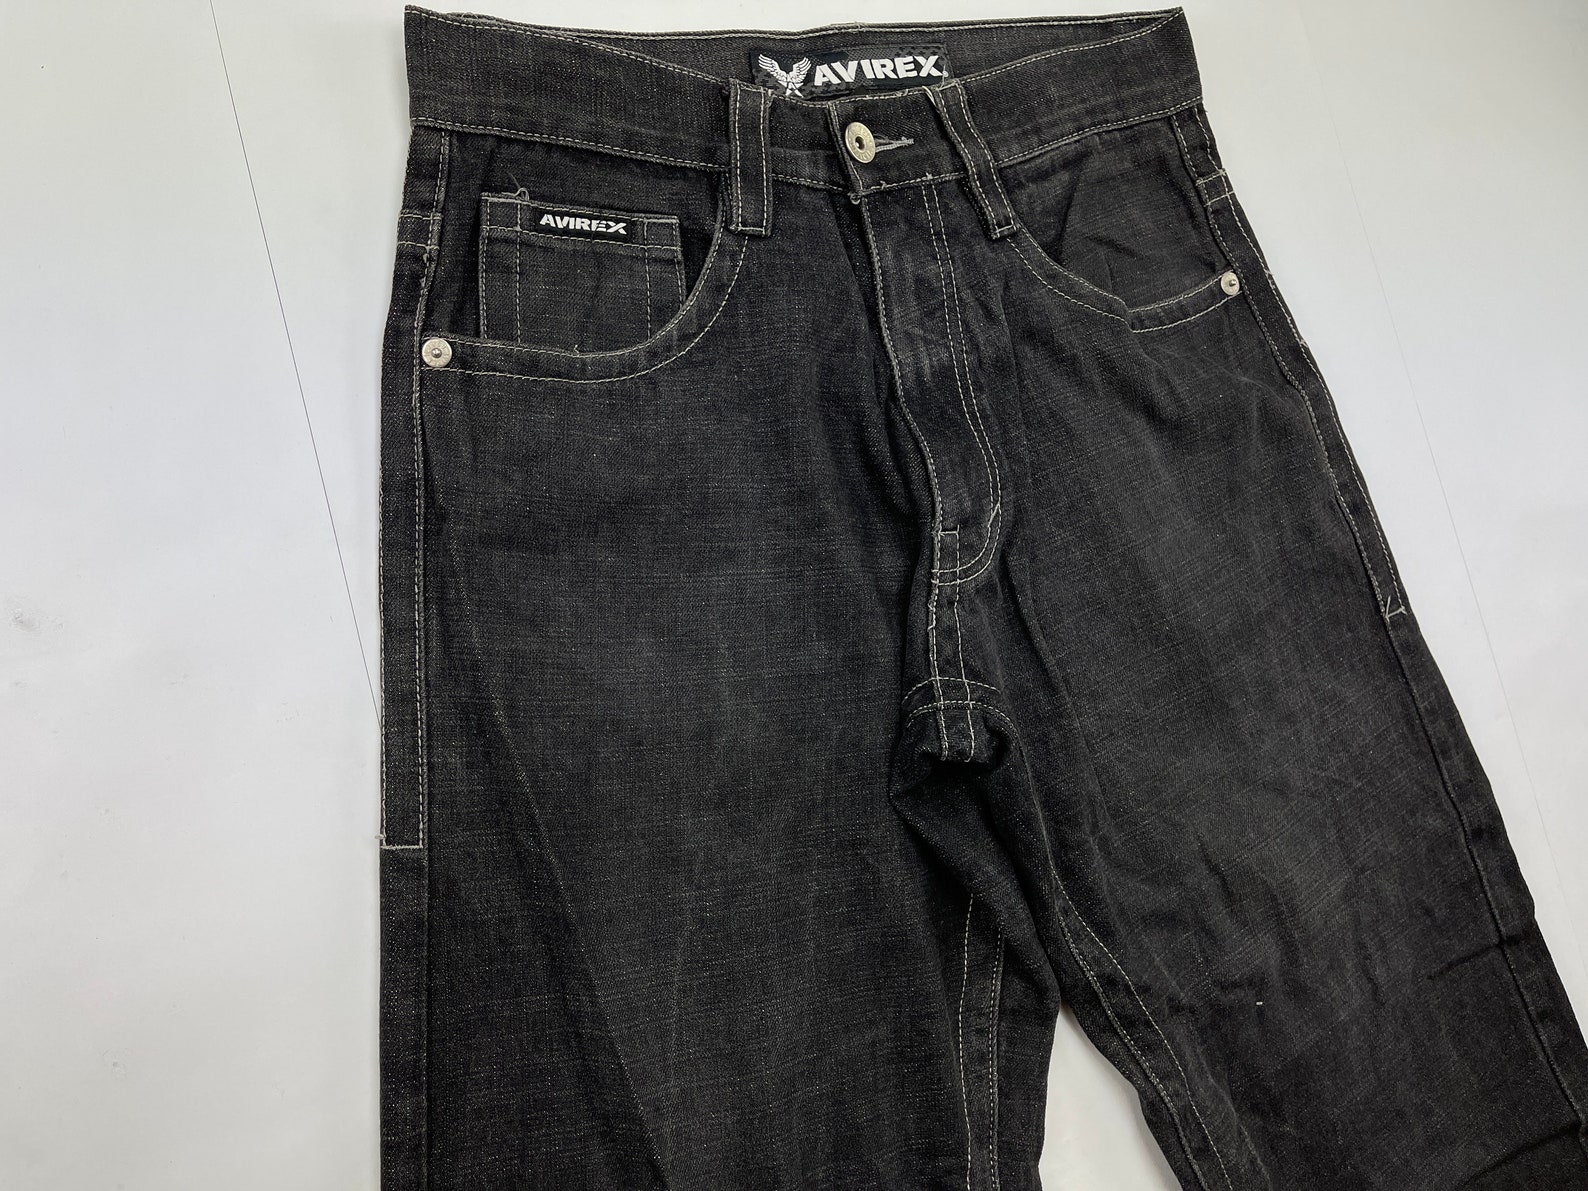 Avirex jeans black vintage baggy jeans 90s hip hop | Etsy